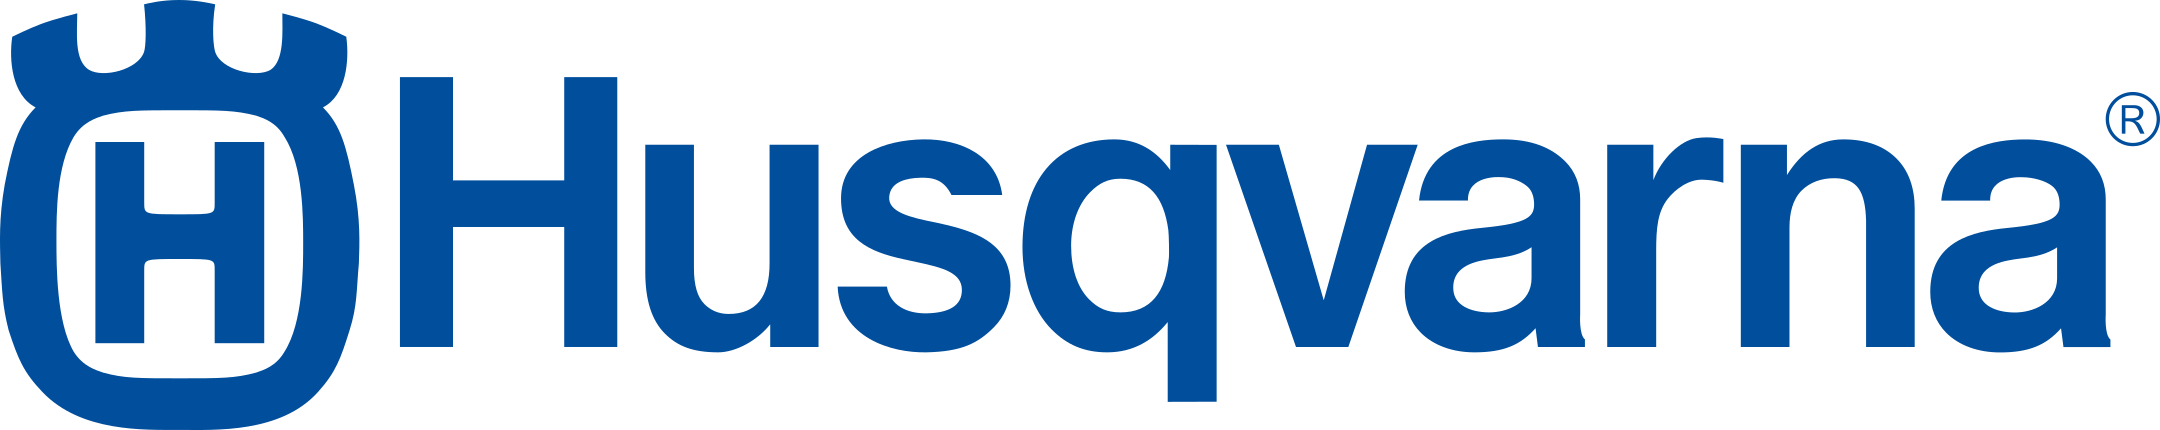 husqvarna logo 2 - Husqvarna Logo